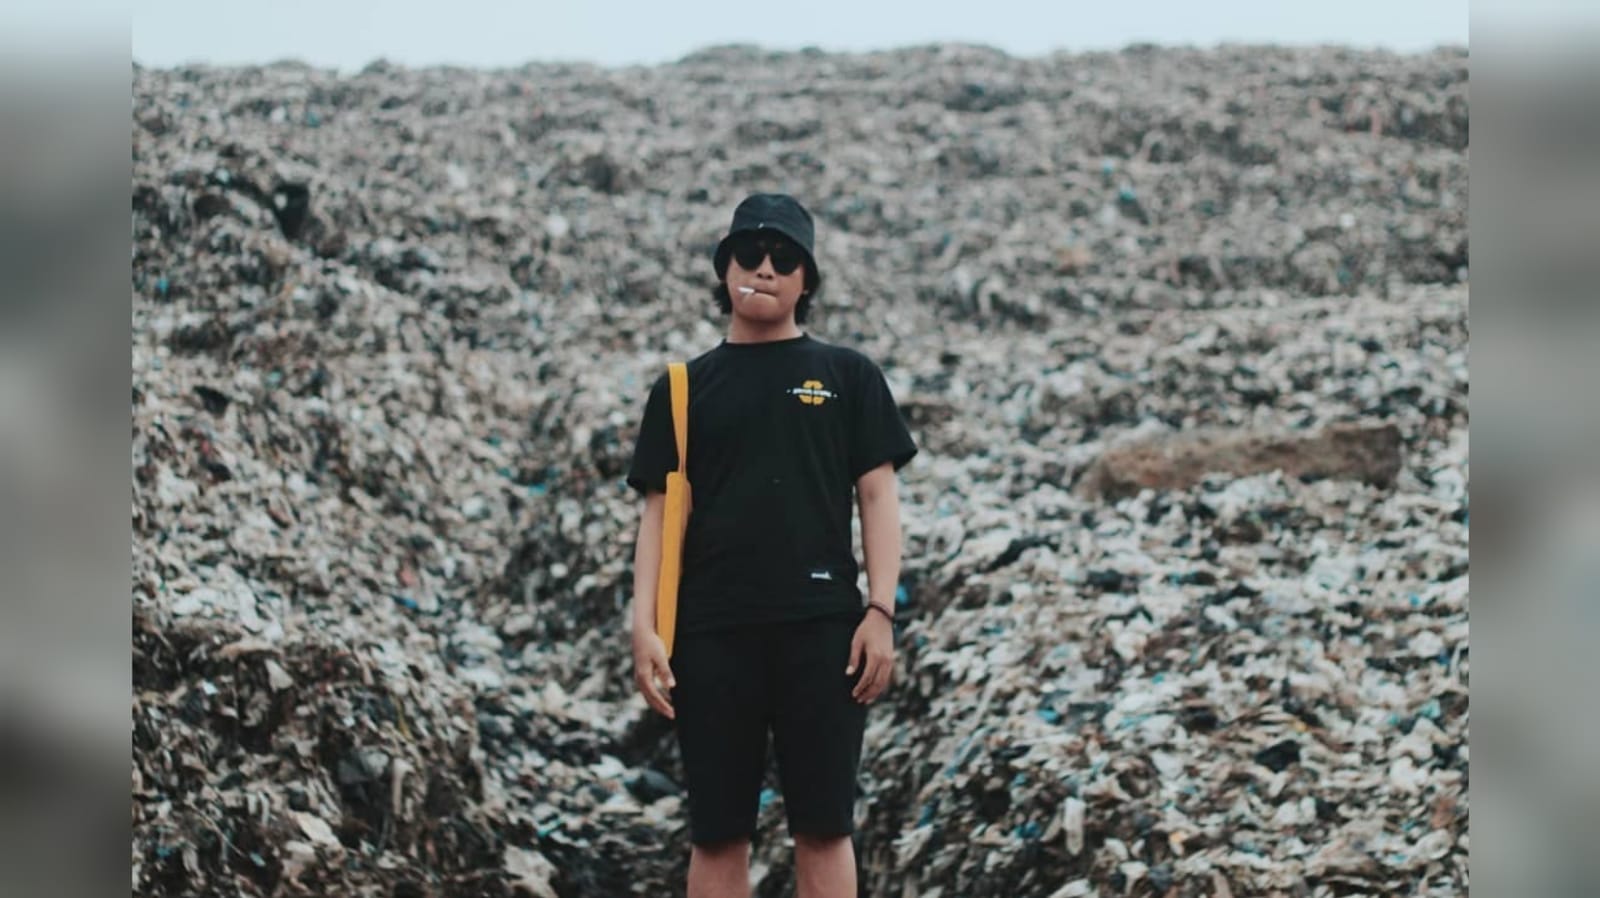 Setara 200 Lapangan Bola! Bantar Gebang, Gunung Sampah Tertinggi Terbesar di Indonesia Hingga Asia Tenggara